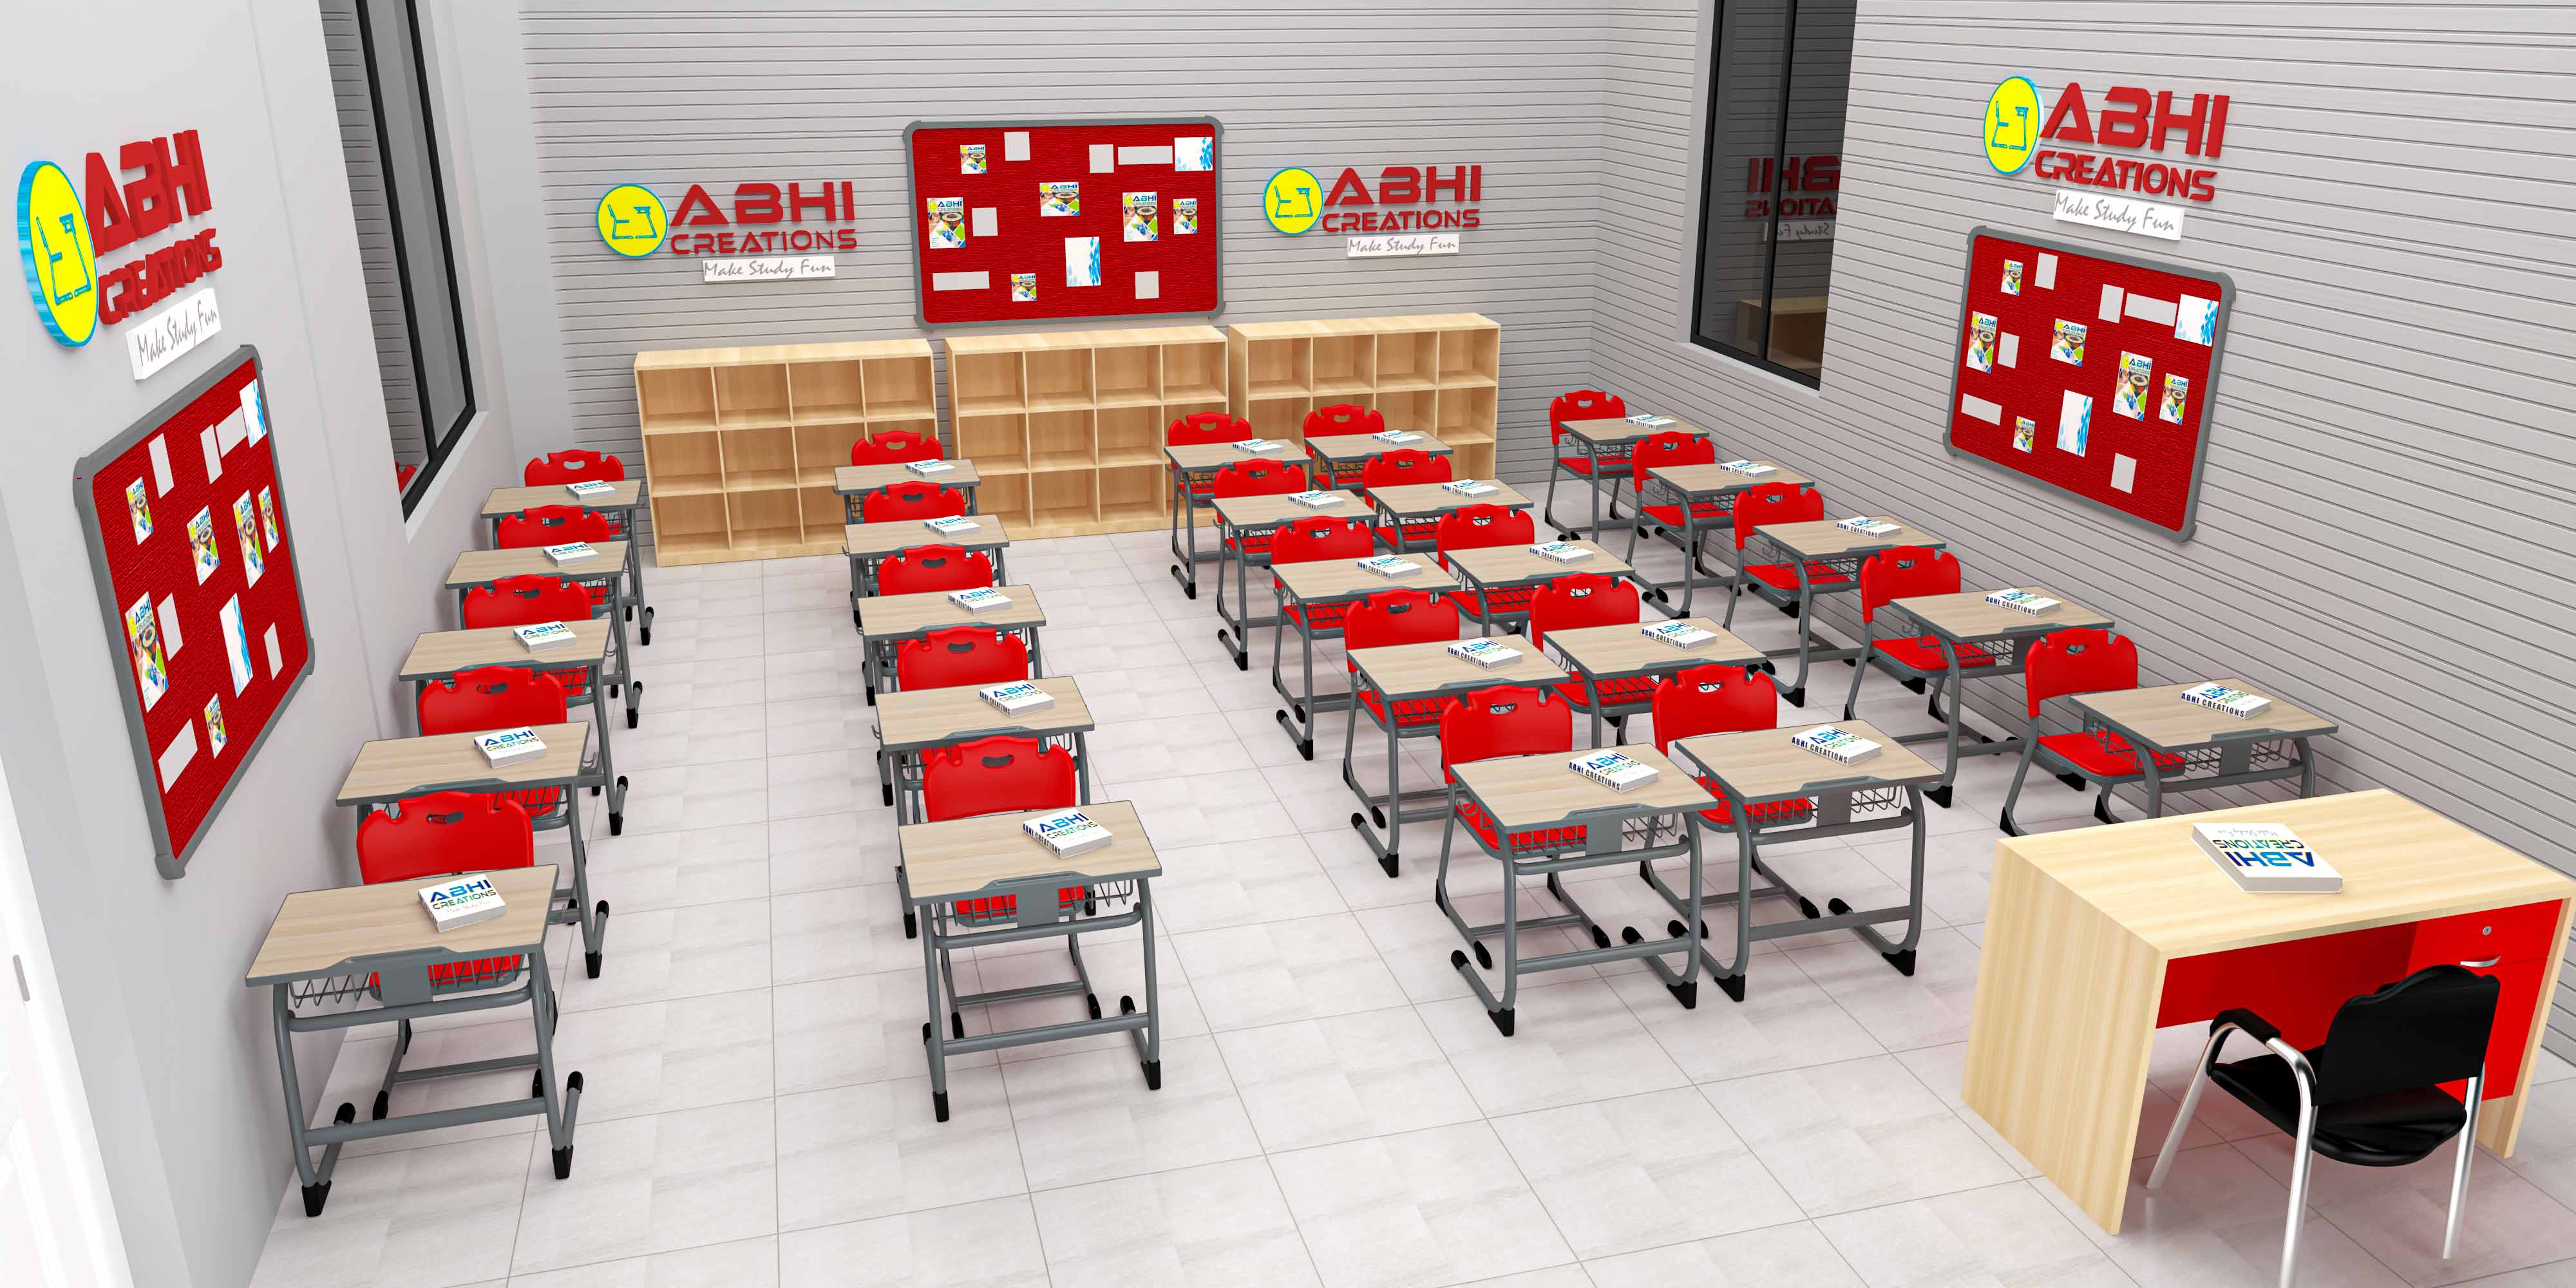 Abhi Creations - School Furniture